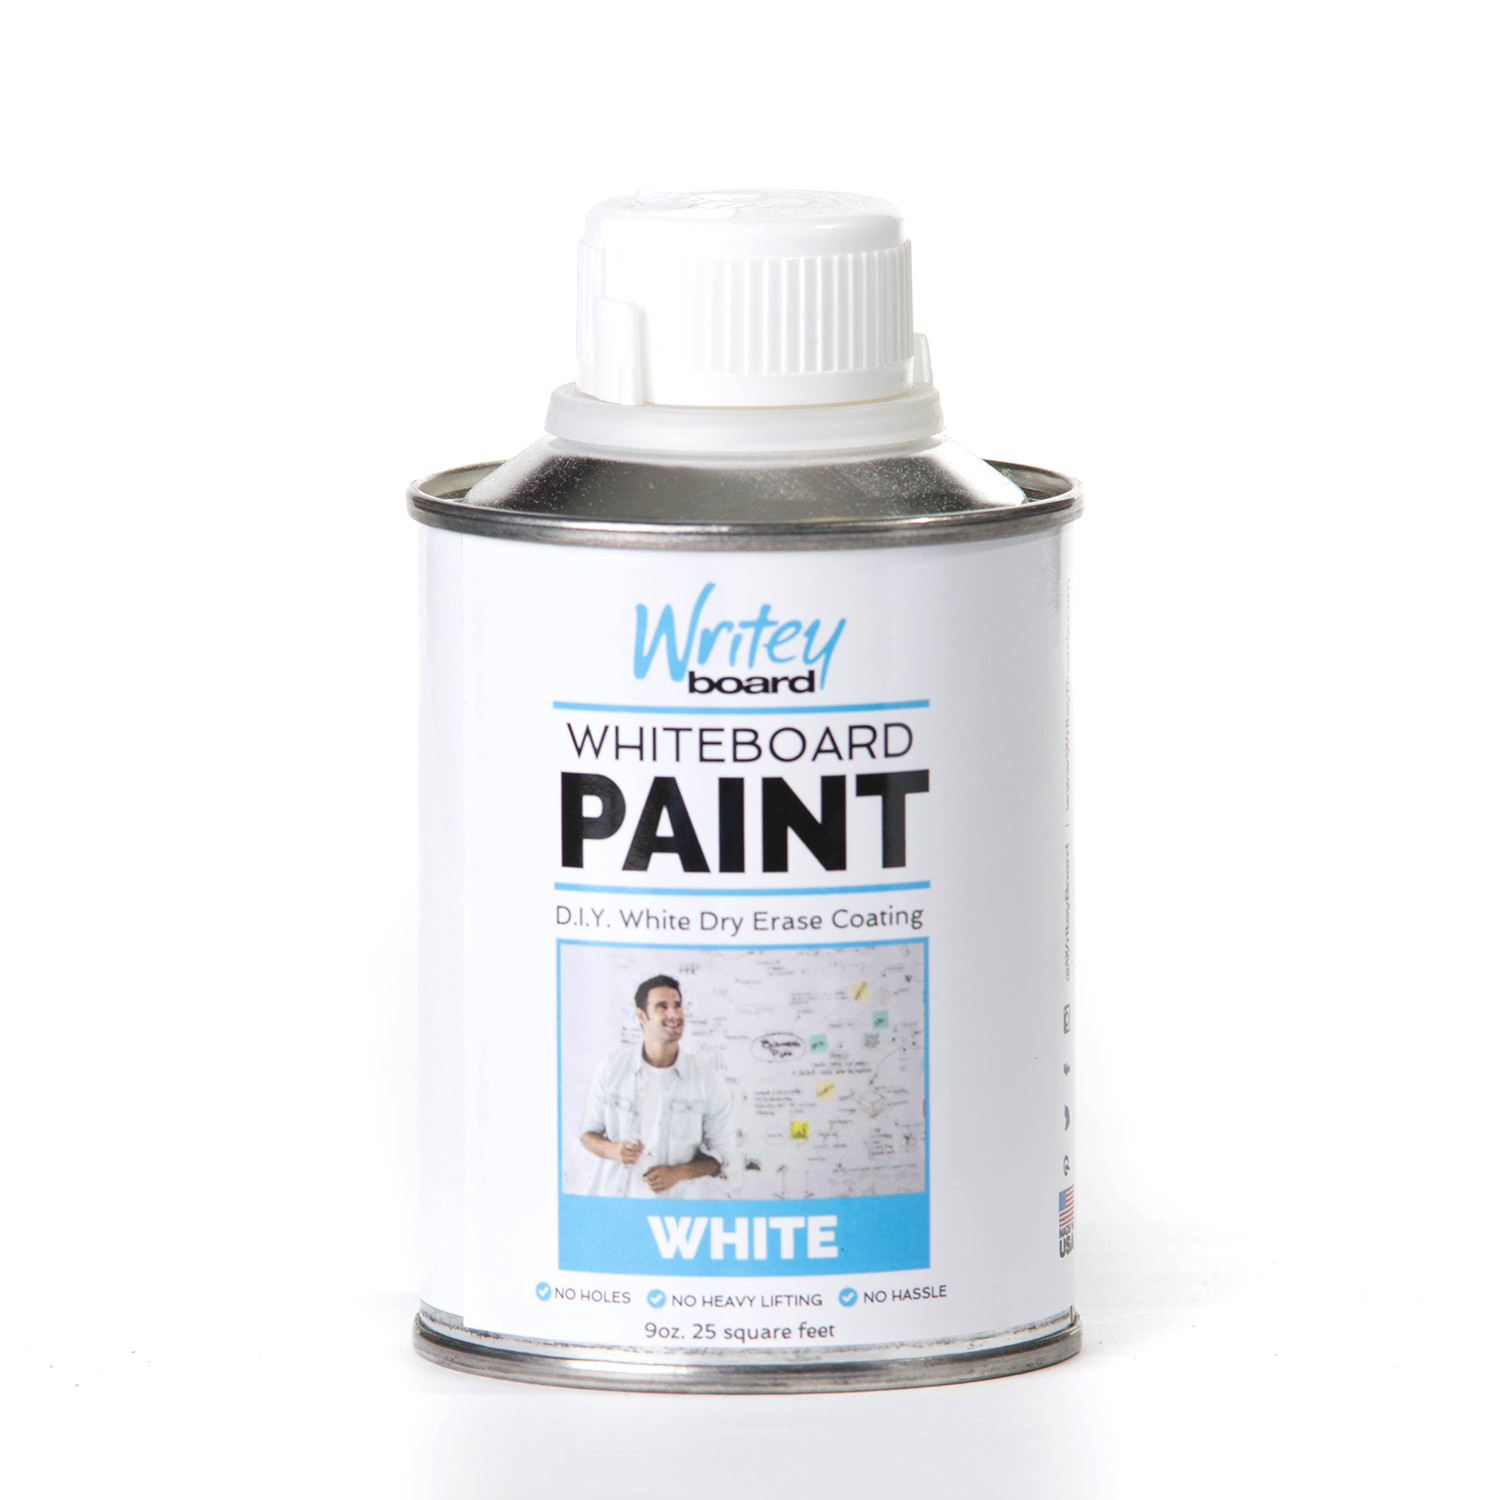 WriteyBoard 30502-PK Whiteboard Paint Kit, 17 oz, White